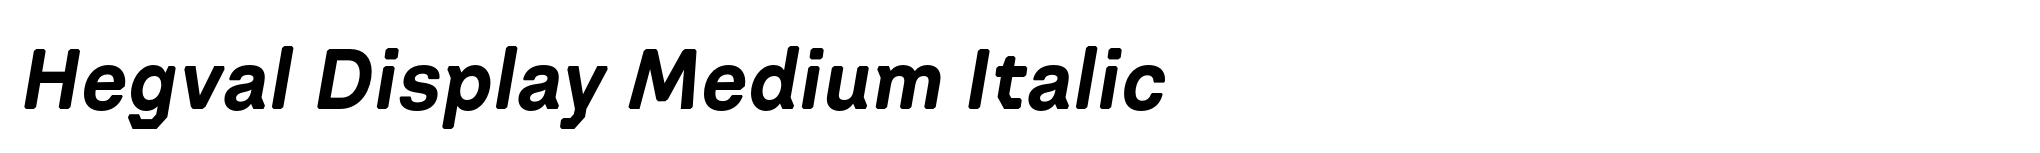 Hegval Display Medium Italic image